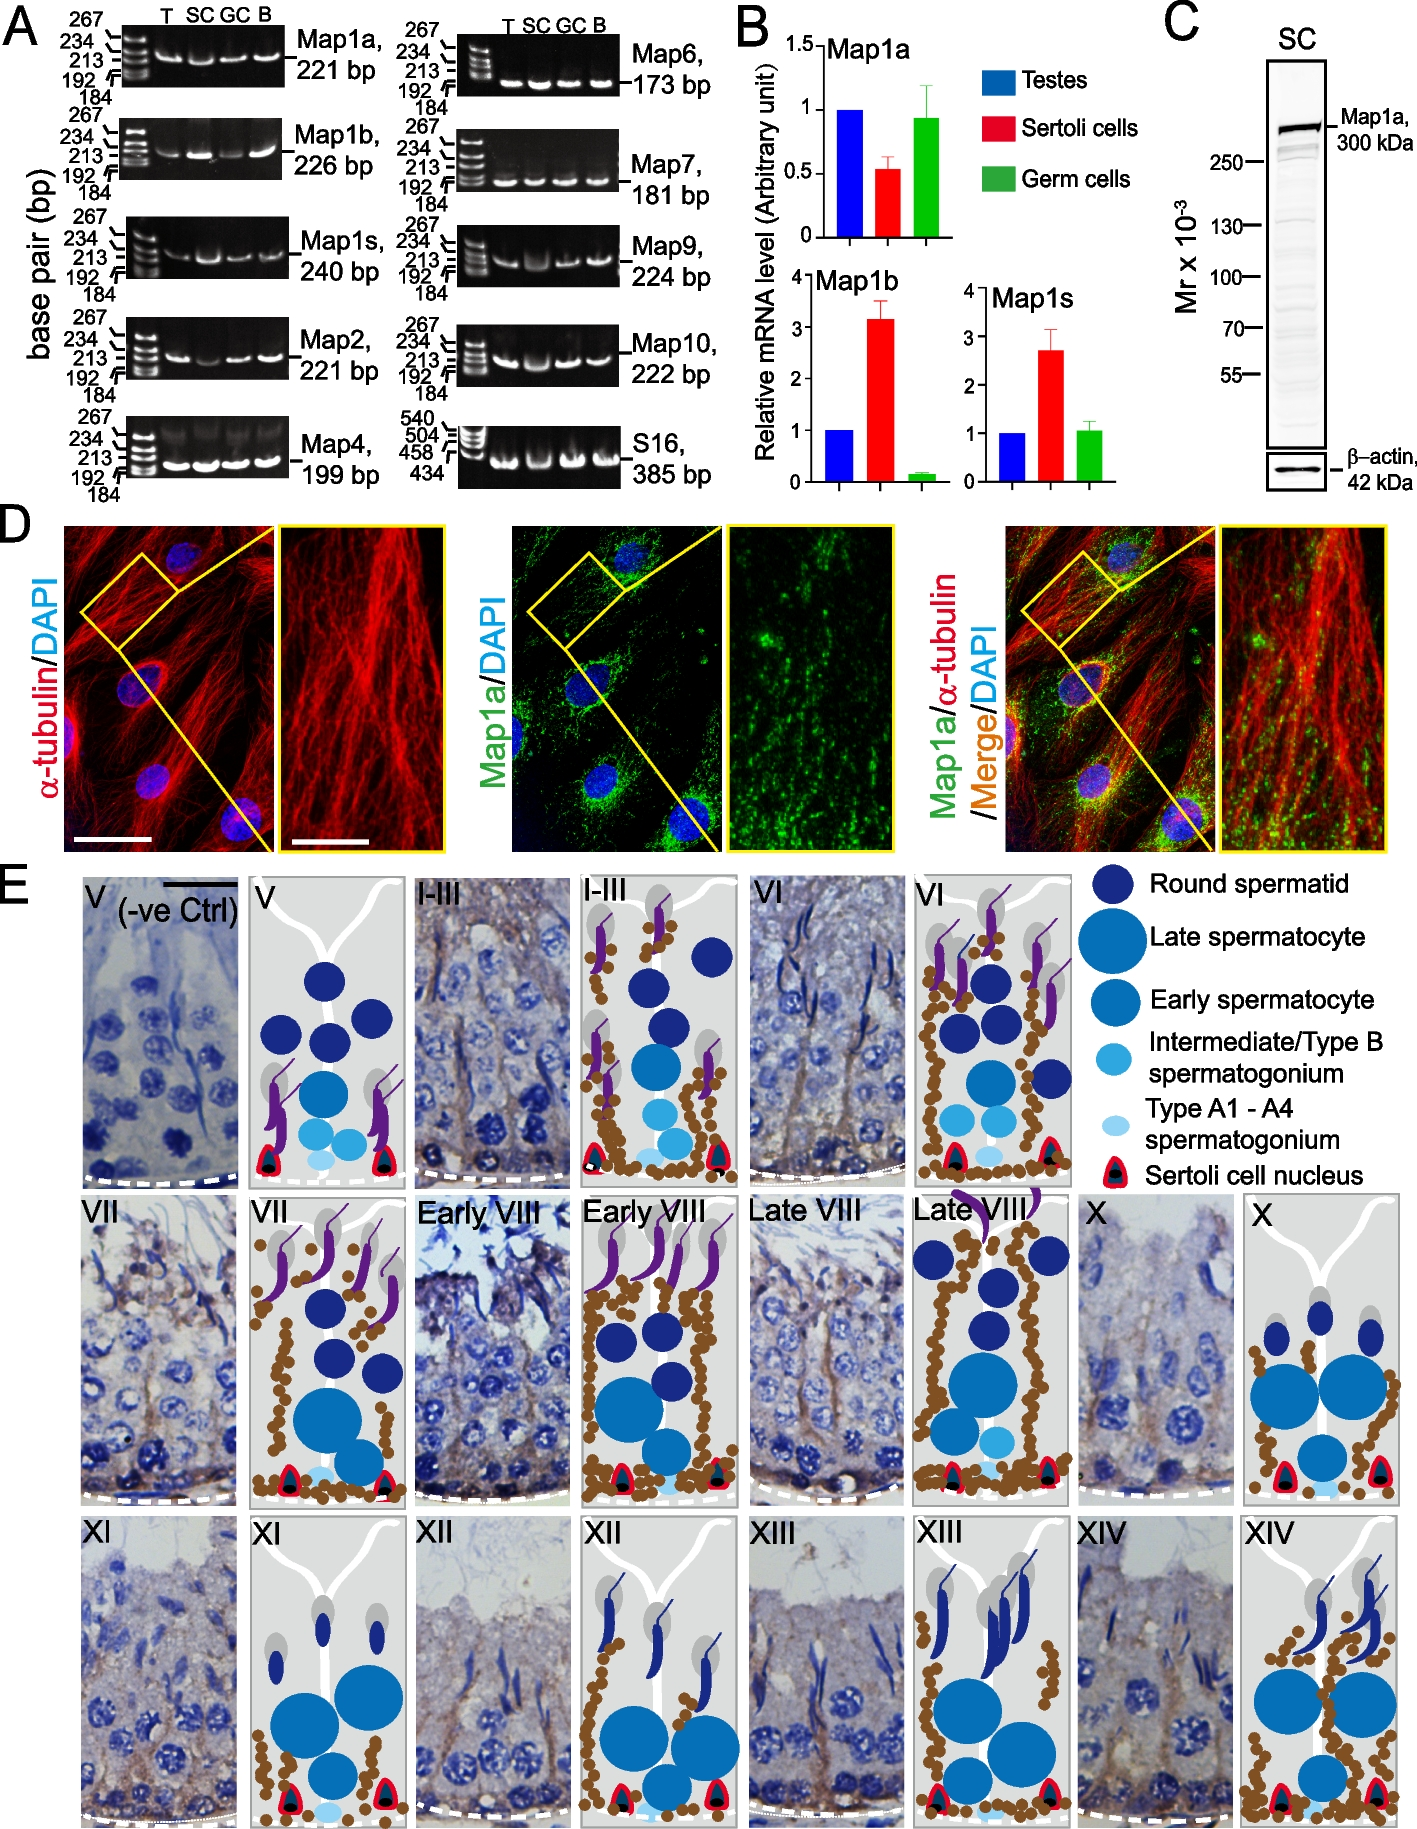 Map-1a regulates Sertoli cell BTB dynamics through the cytoskeletal organization of microtubule and F-actin